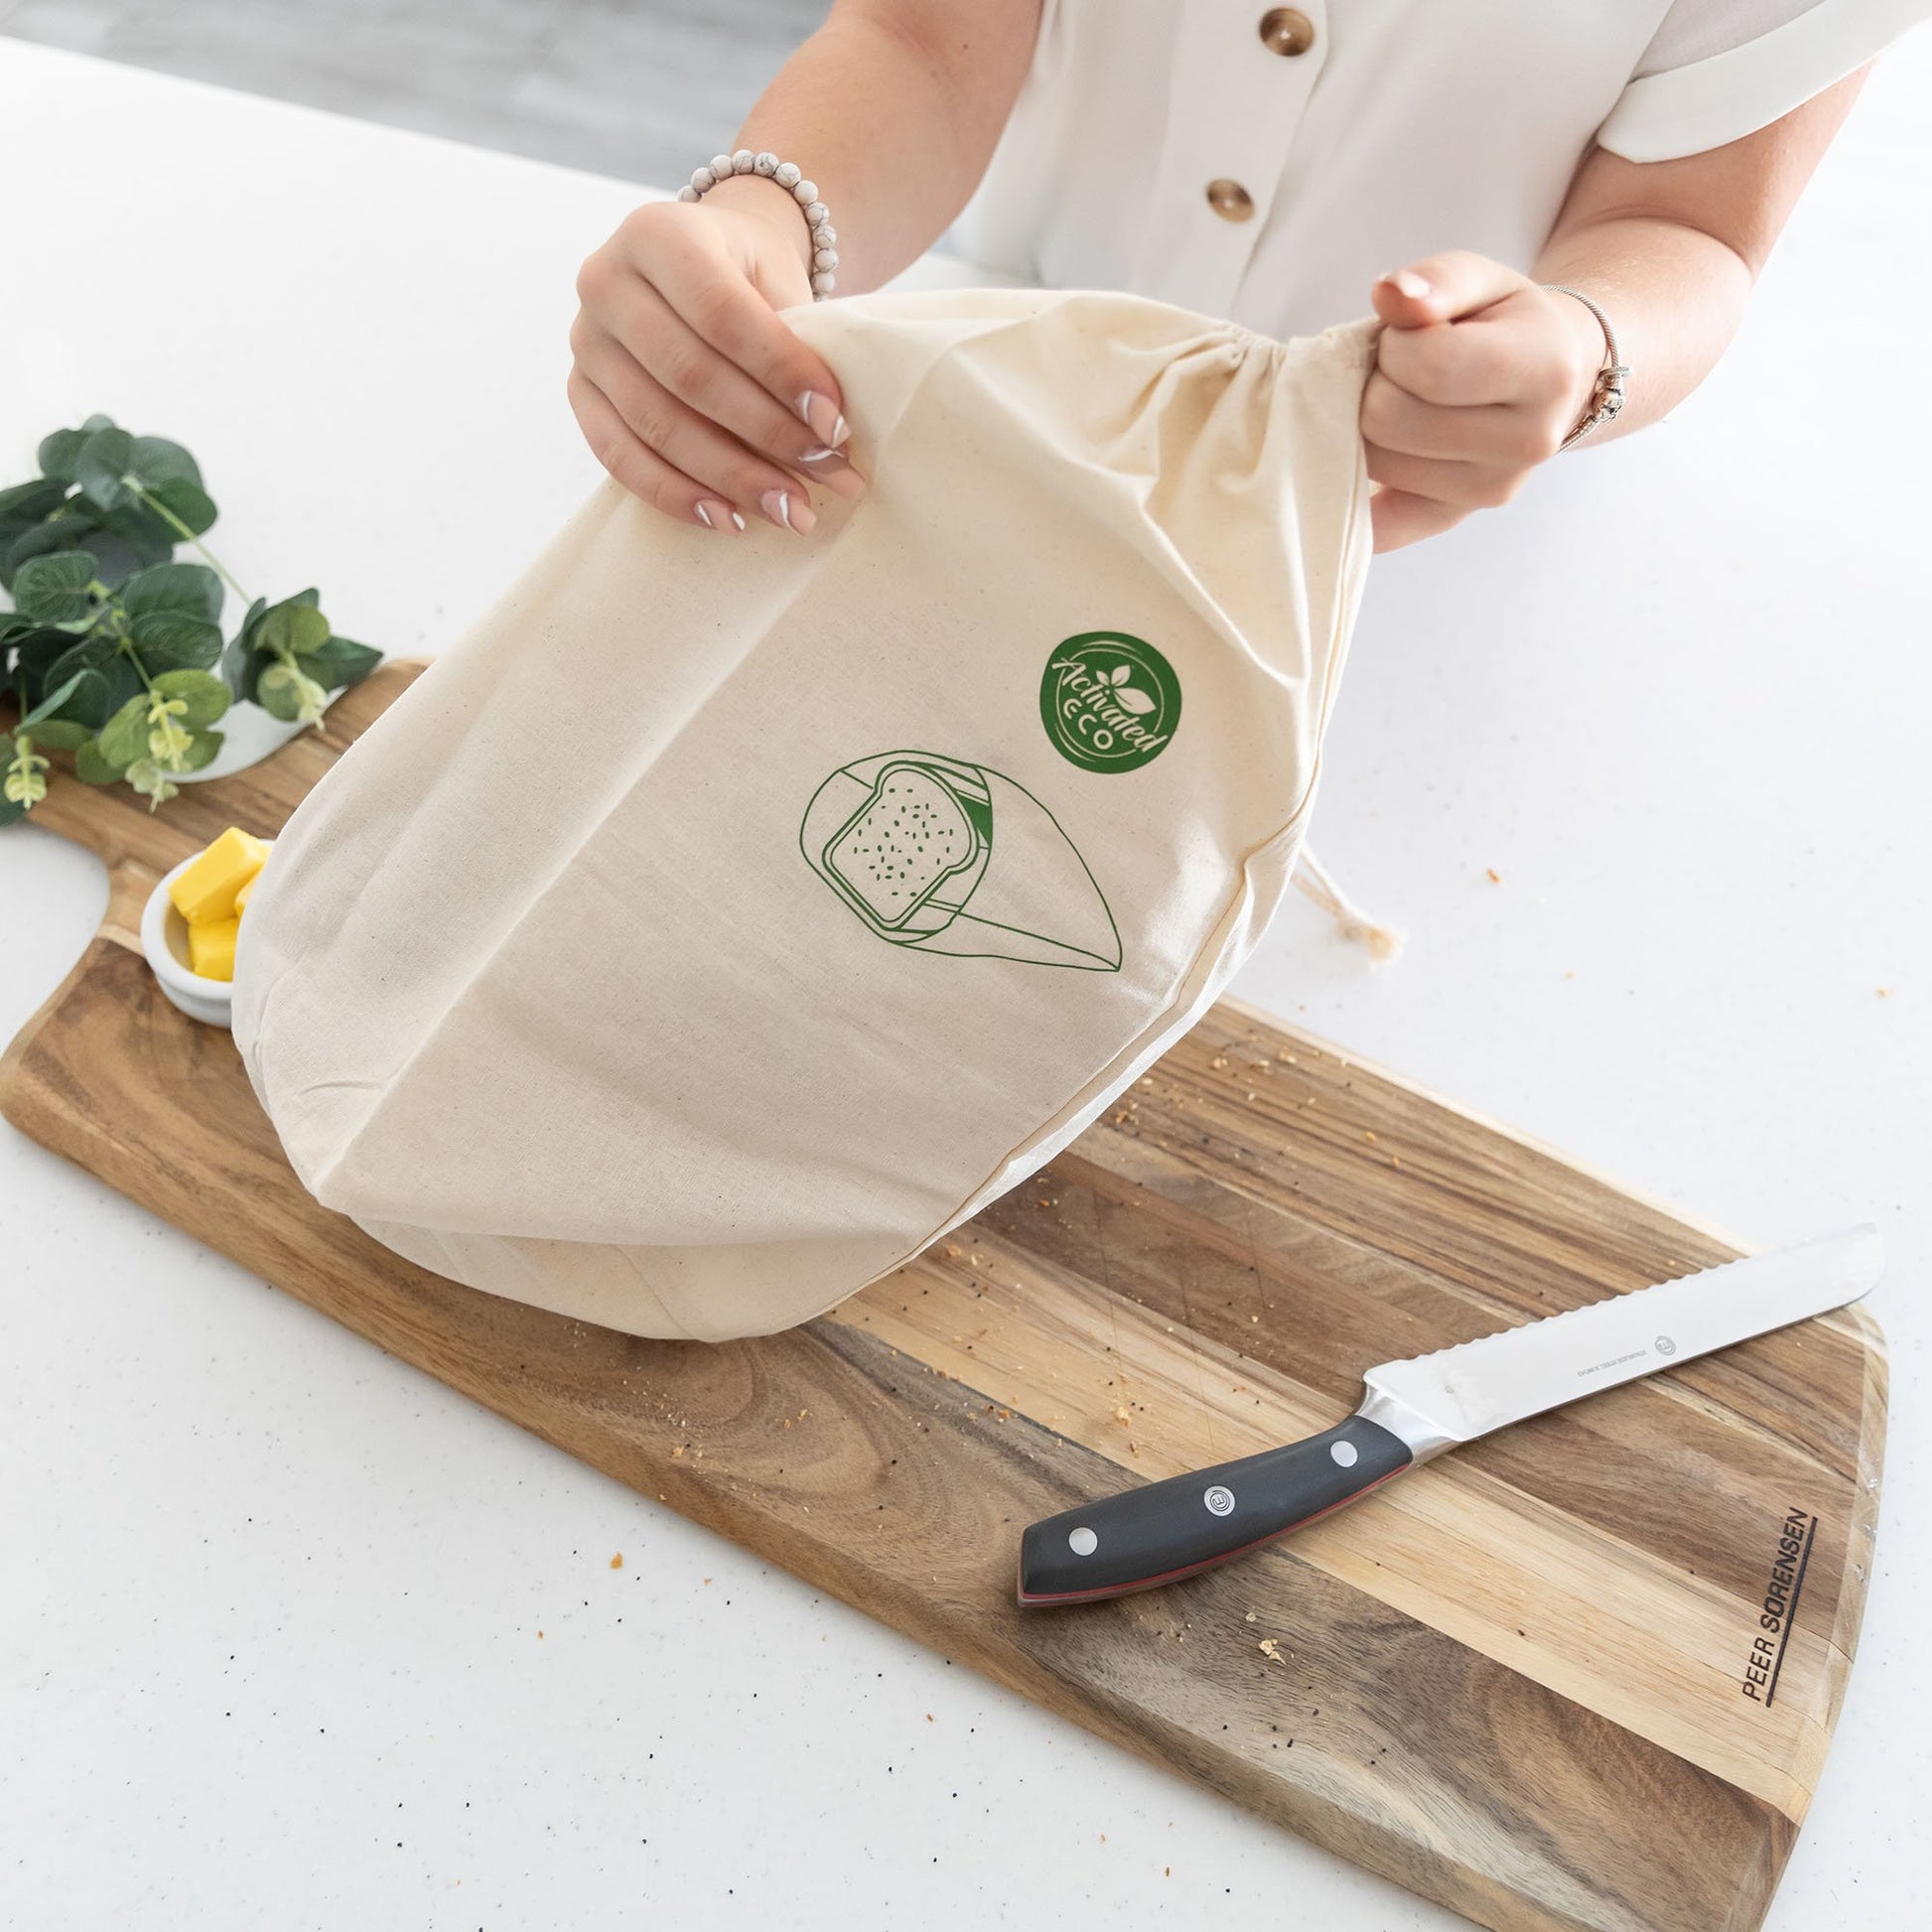 Organic Cotton Bread Bag 2 Pack - Banish